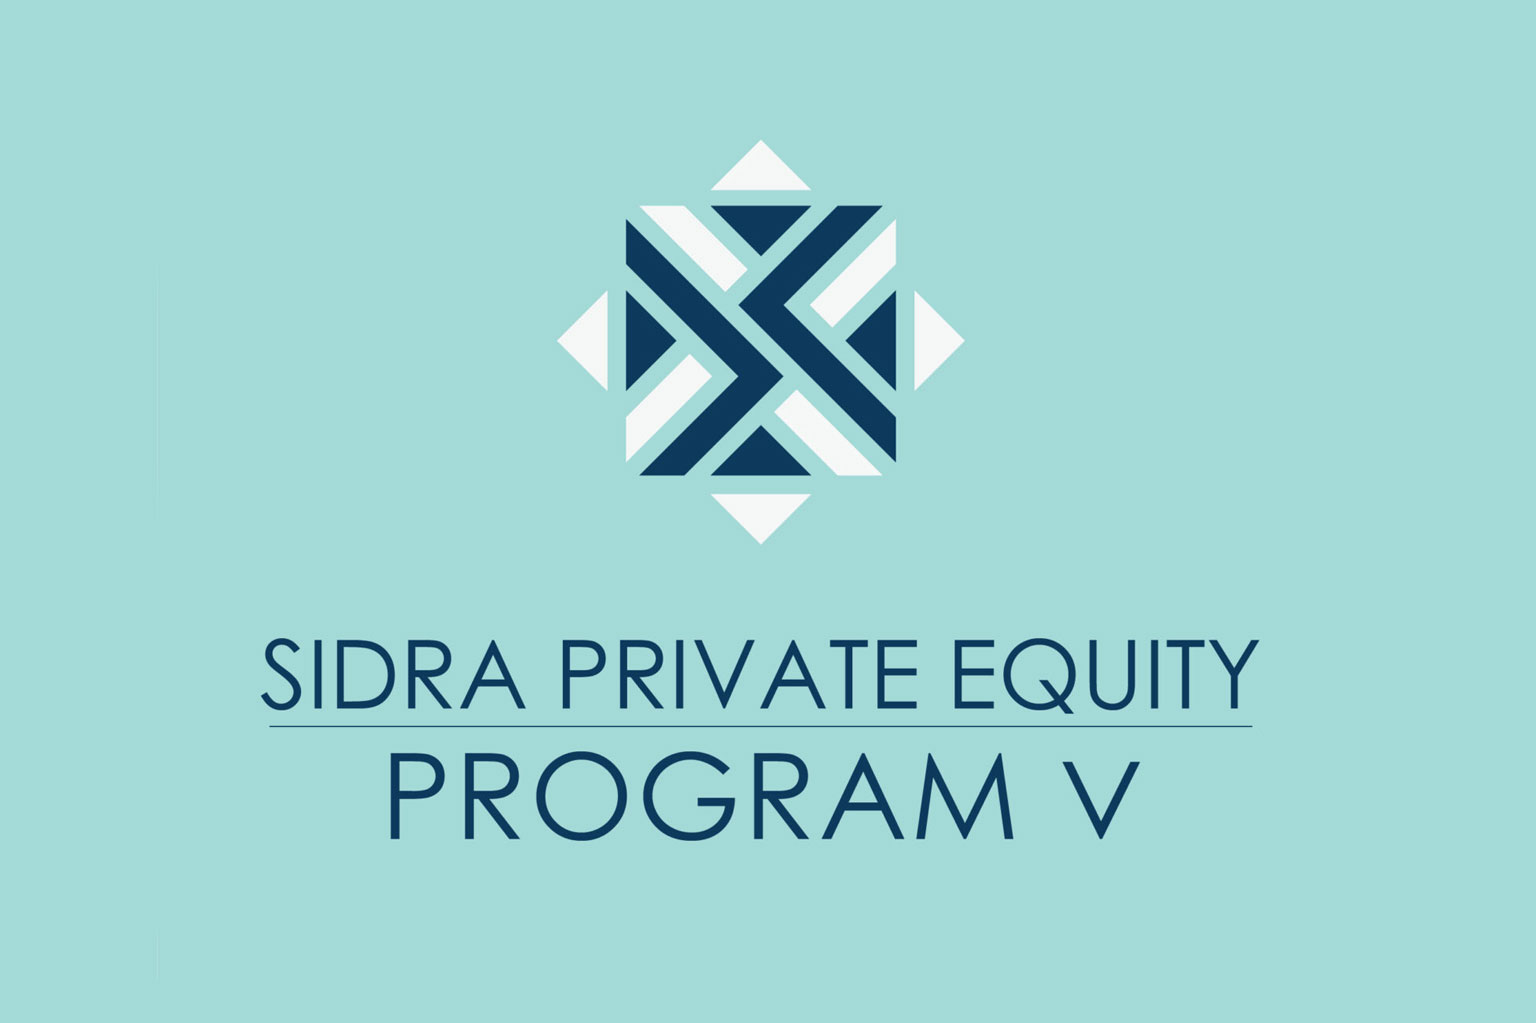 Sidra Private Equity Program V